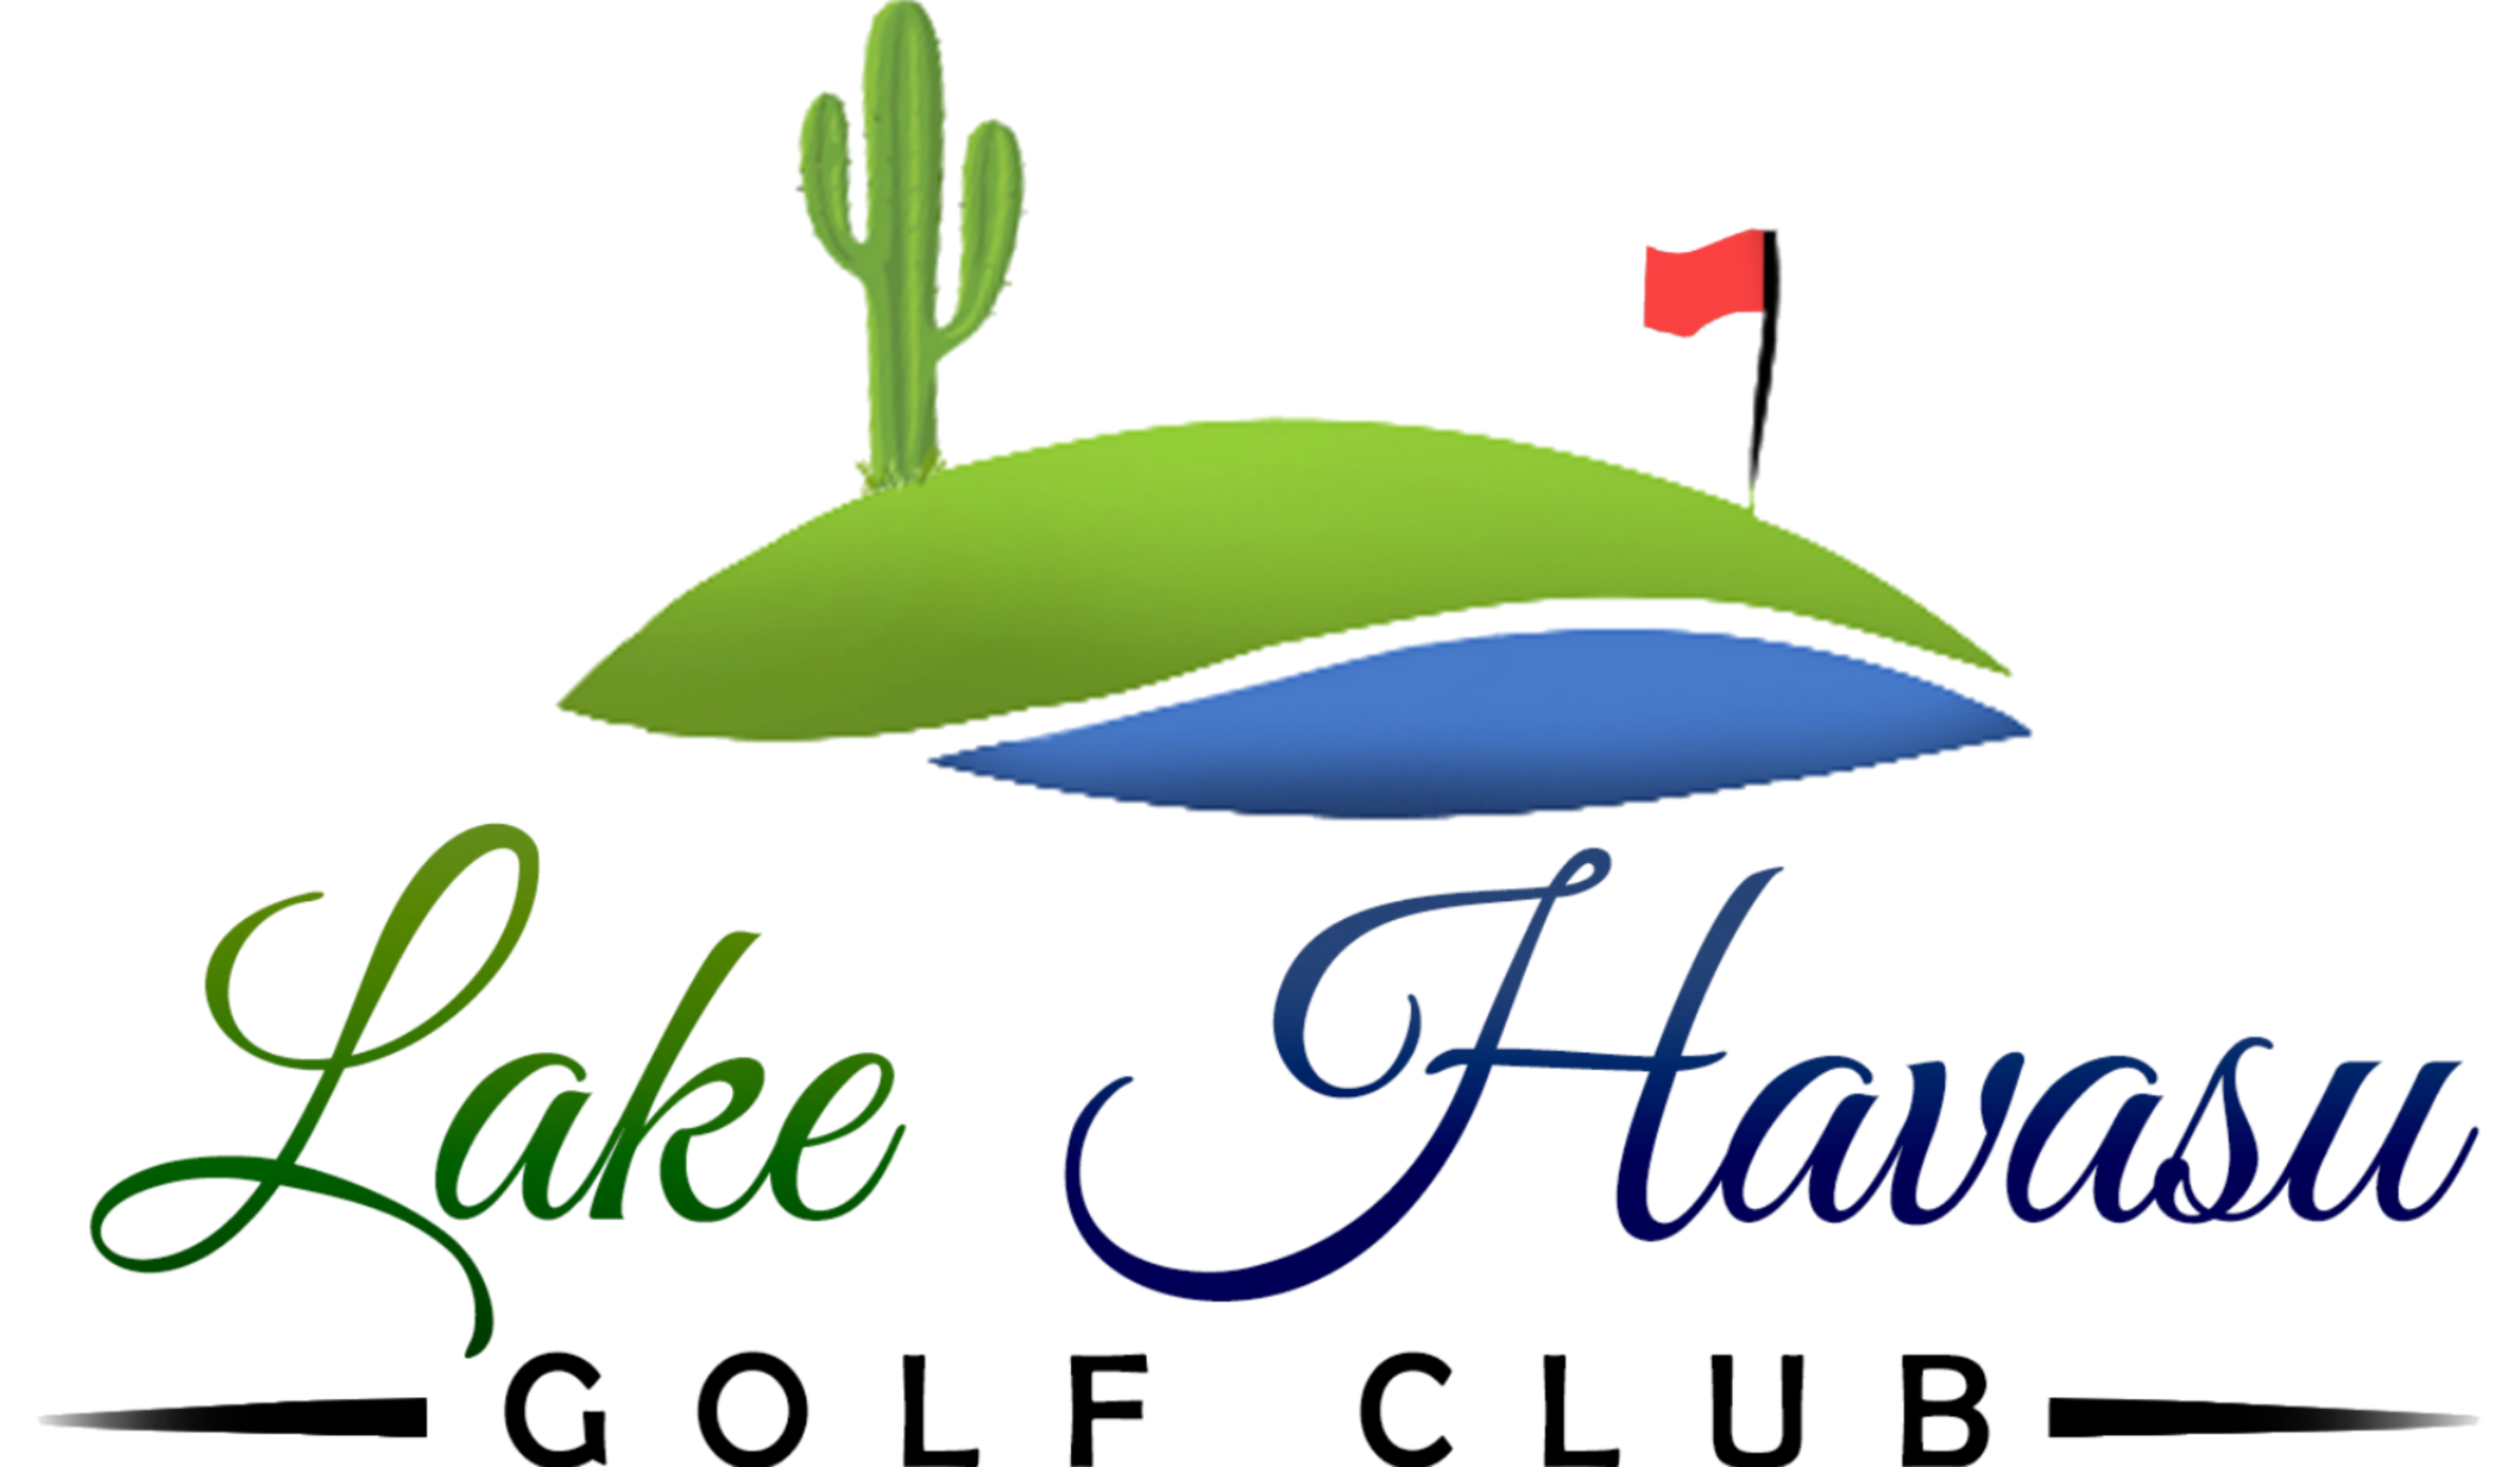 Lake Havasu Golf Club